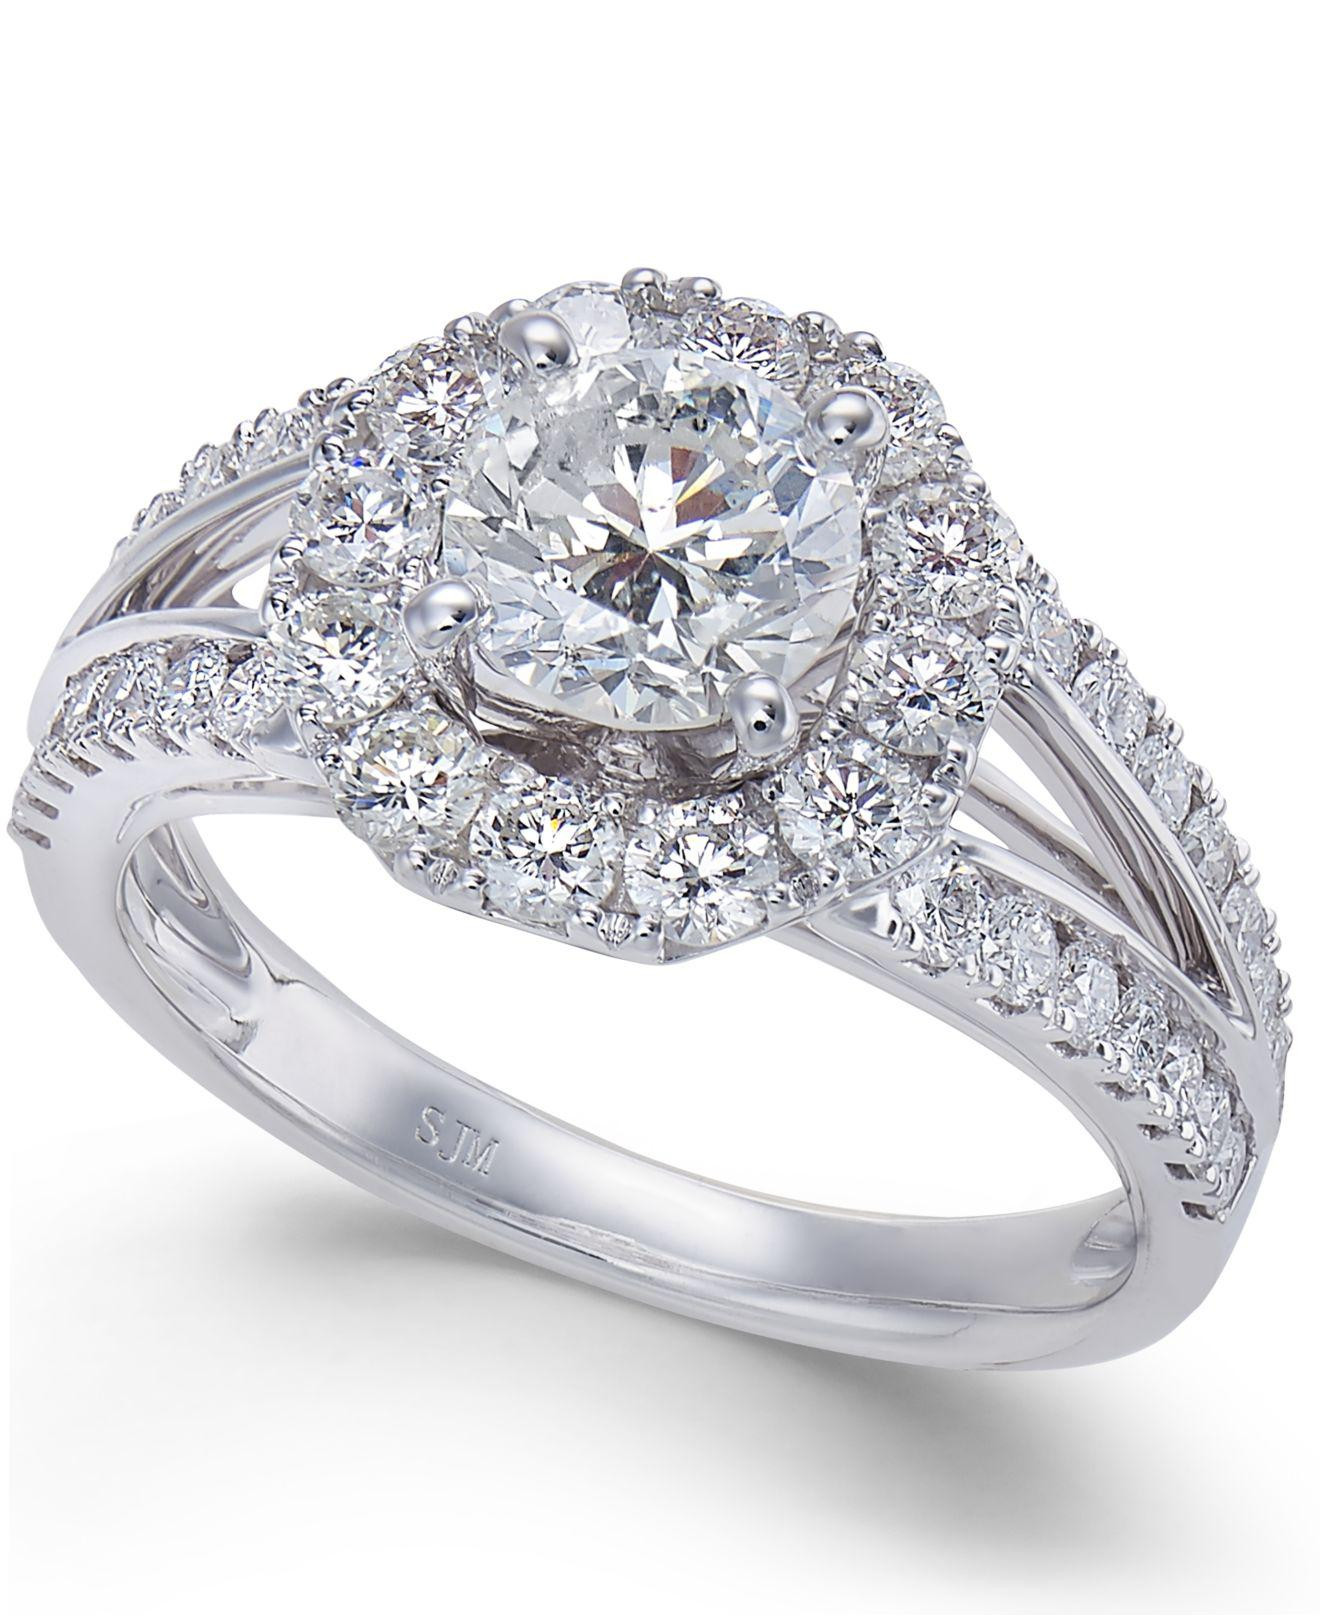 Macys Diamond Rings
 Macy s Diamond Halo Engagement Ring 2 Ct T w In 14k